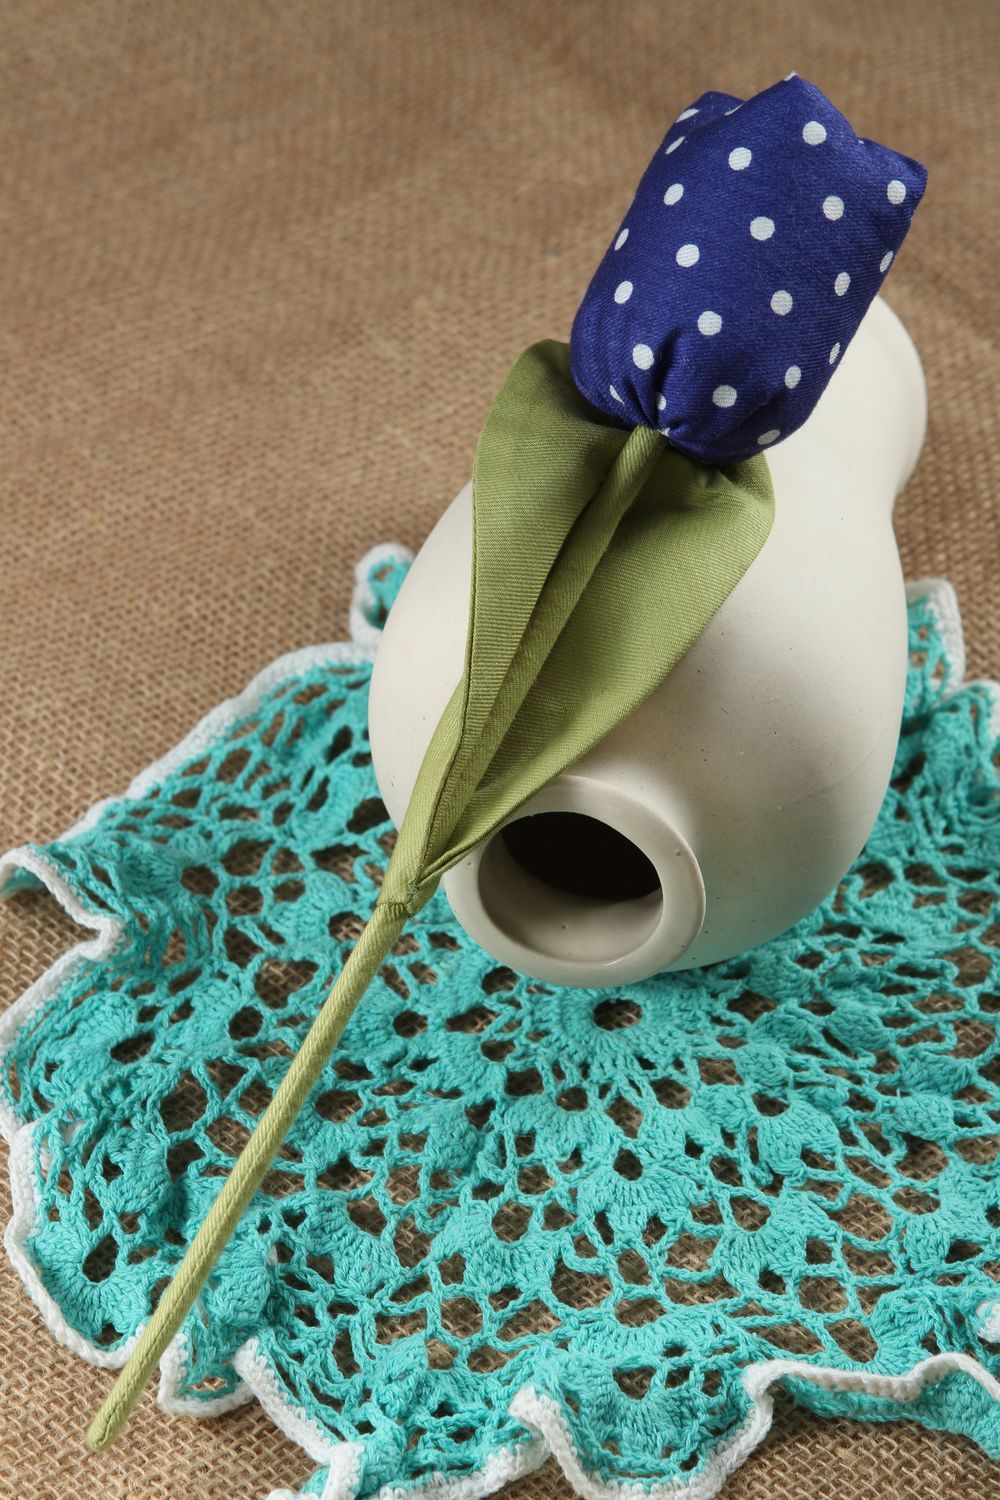 Handmade fabric flower textile soft flower table decor ideas decorative use only photo 2